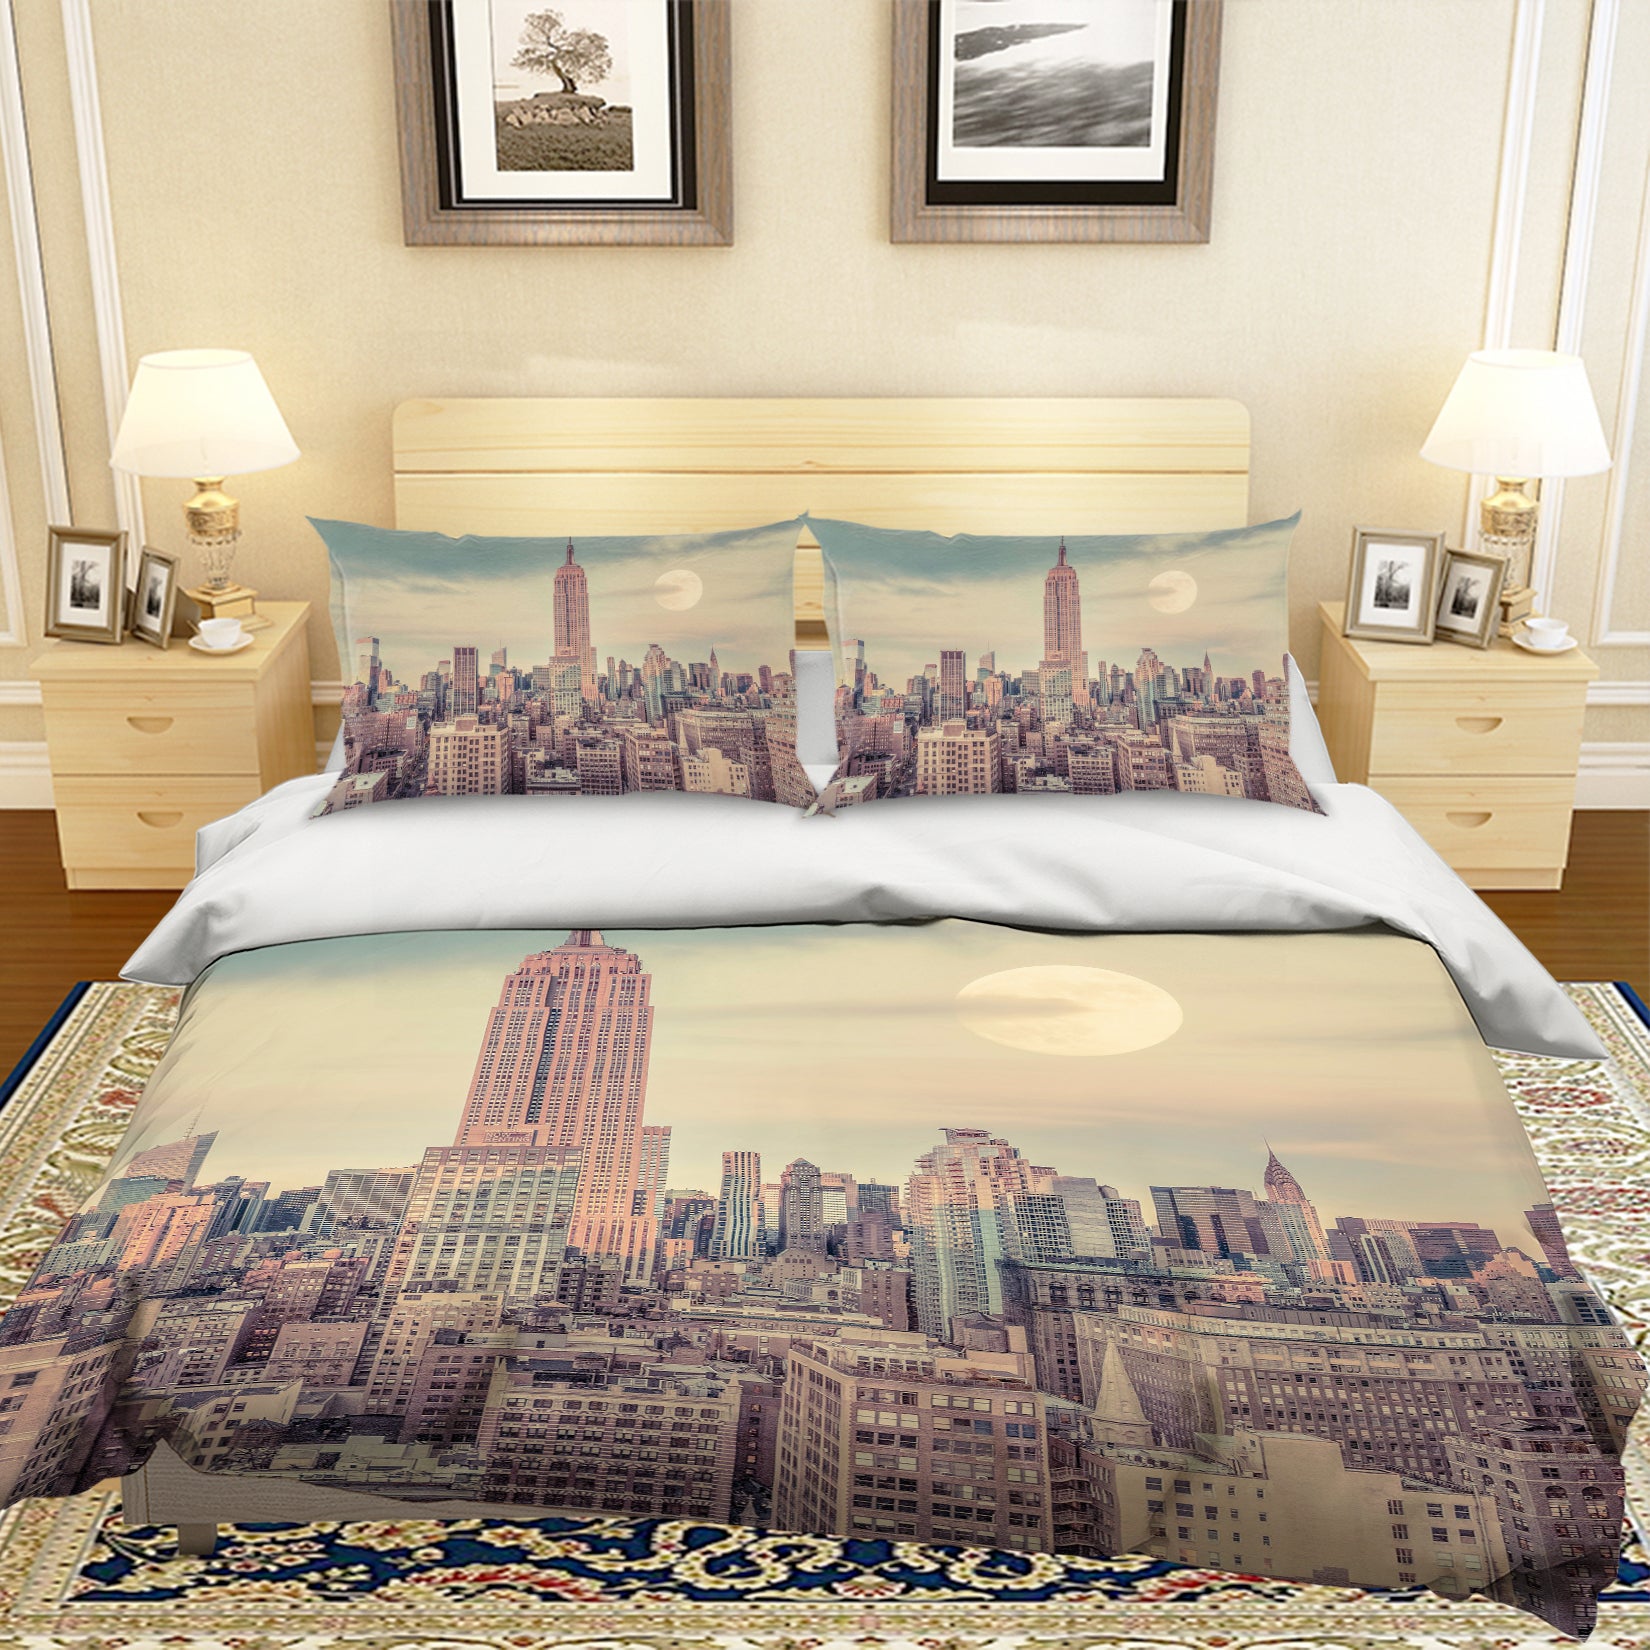 3D Moon City 7118 Assaf Frank Bedding Bed Pillowcases Quilt Cover Duvet Cover